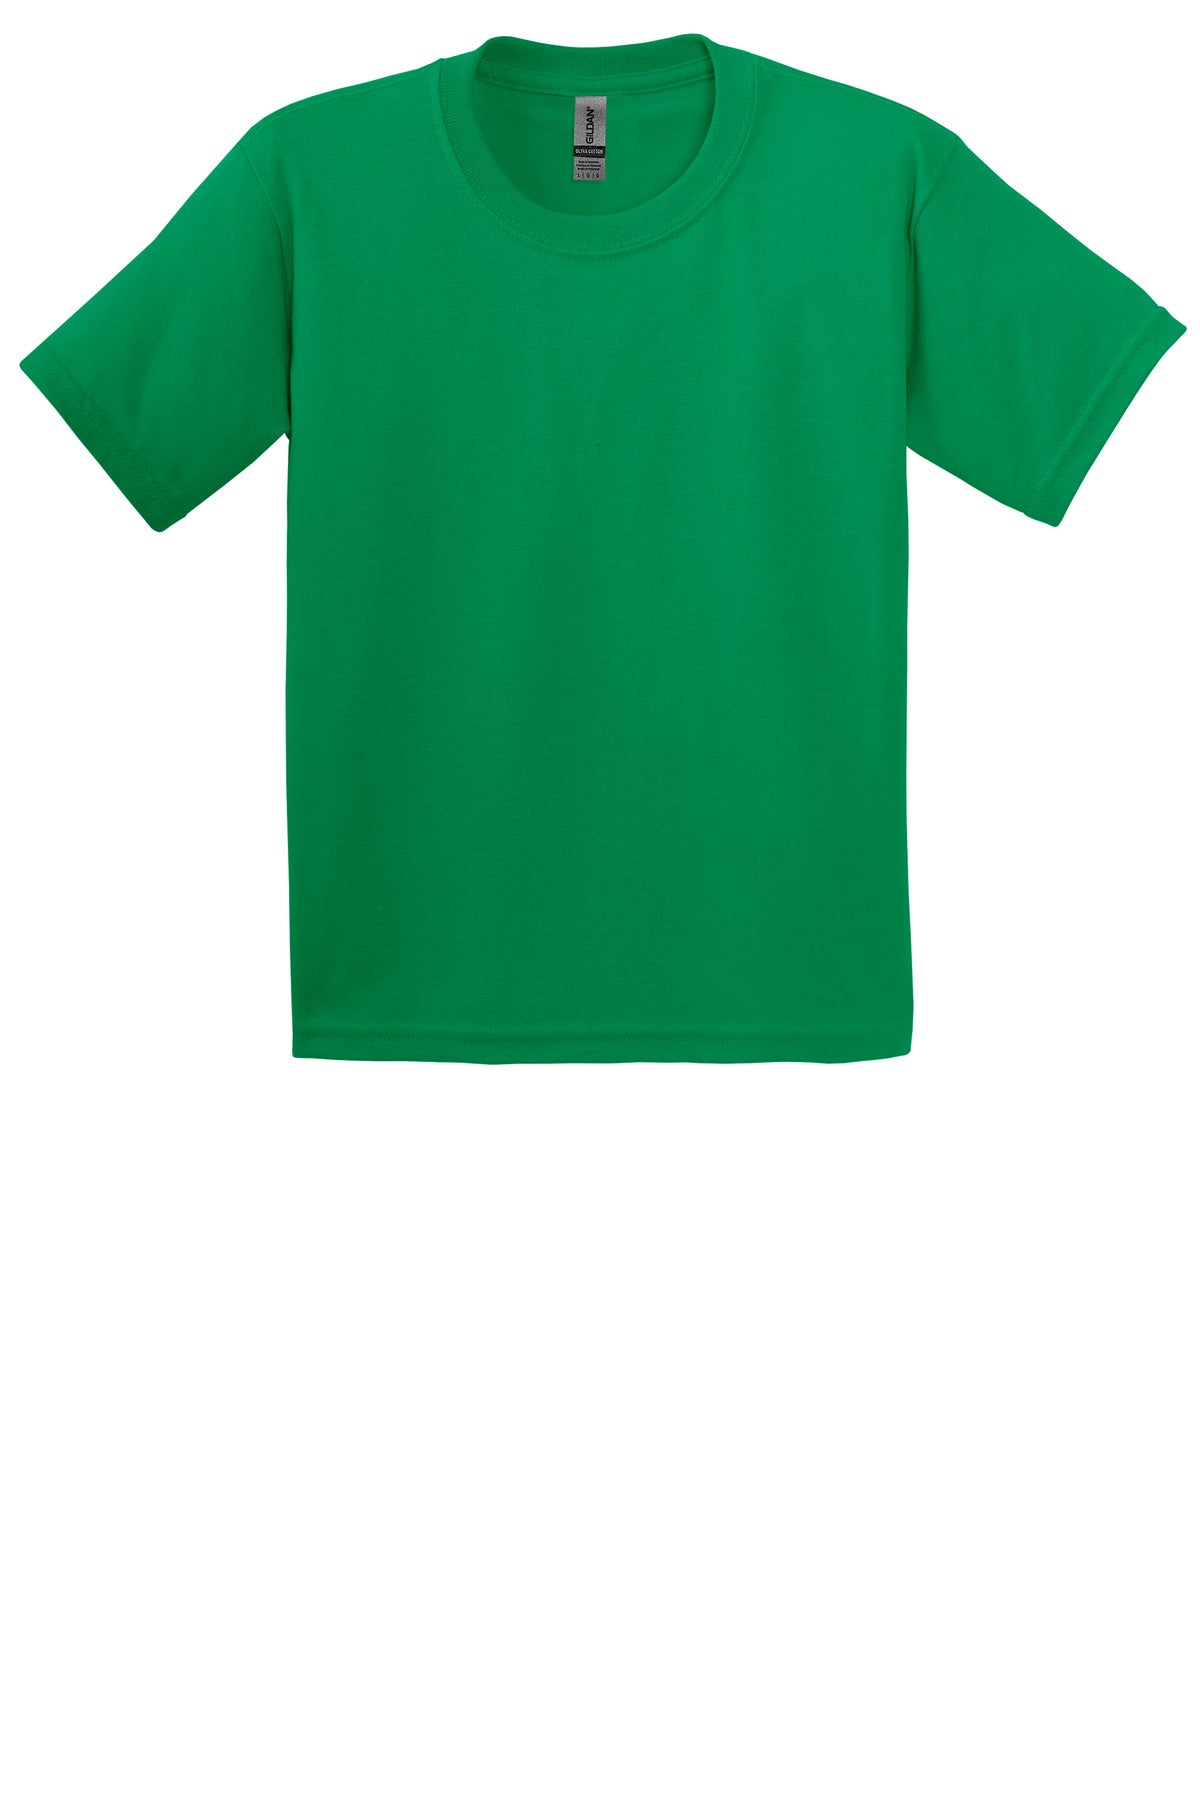 Gildan - Youth Ultra Cotton 100% US Cotton T-Shirt. 2000B - Kelly Green